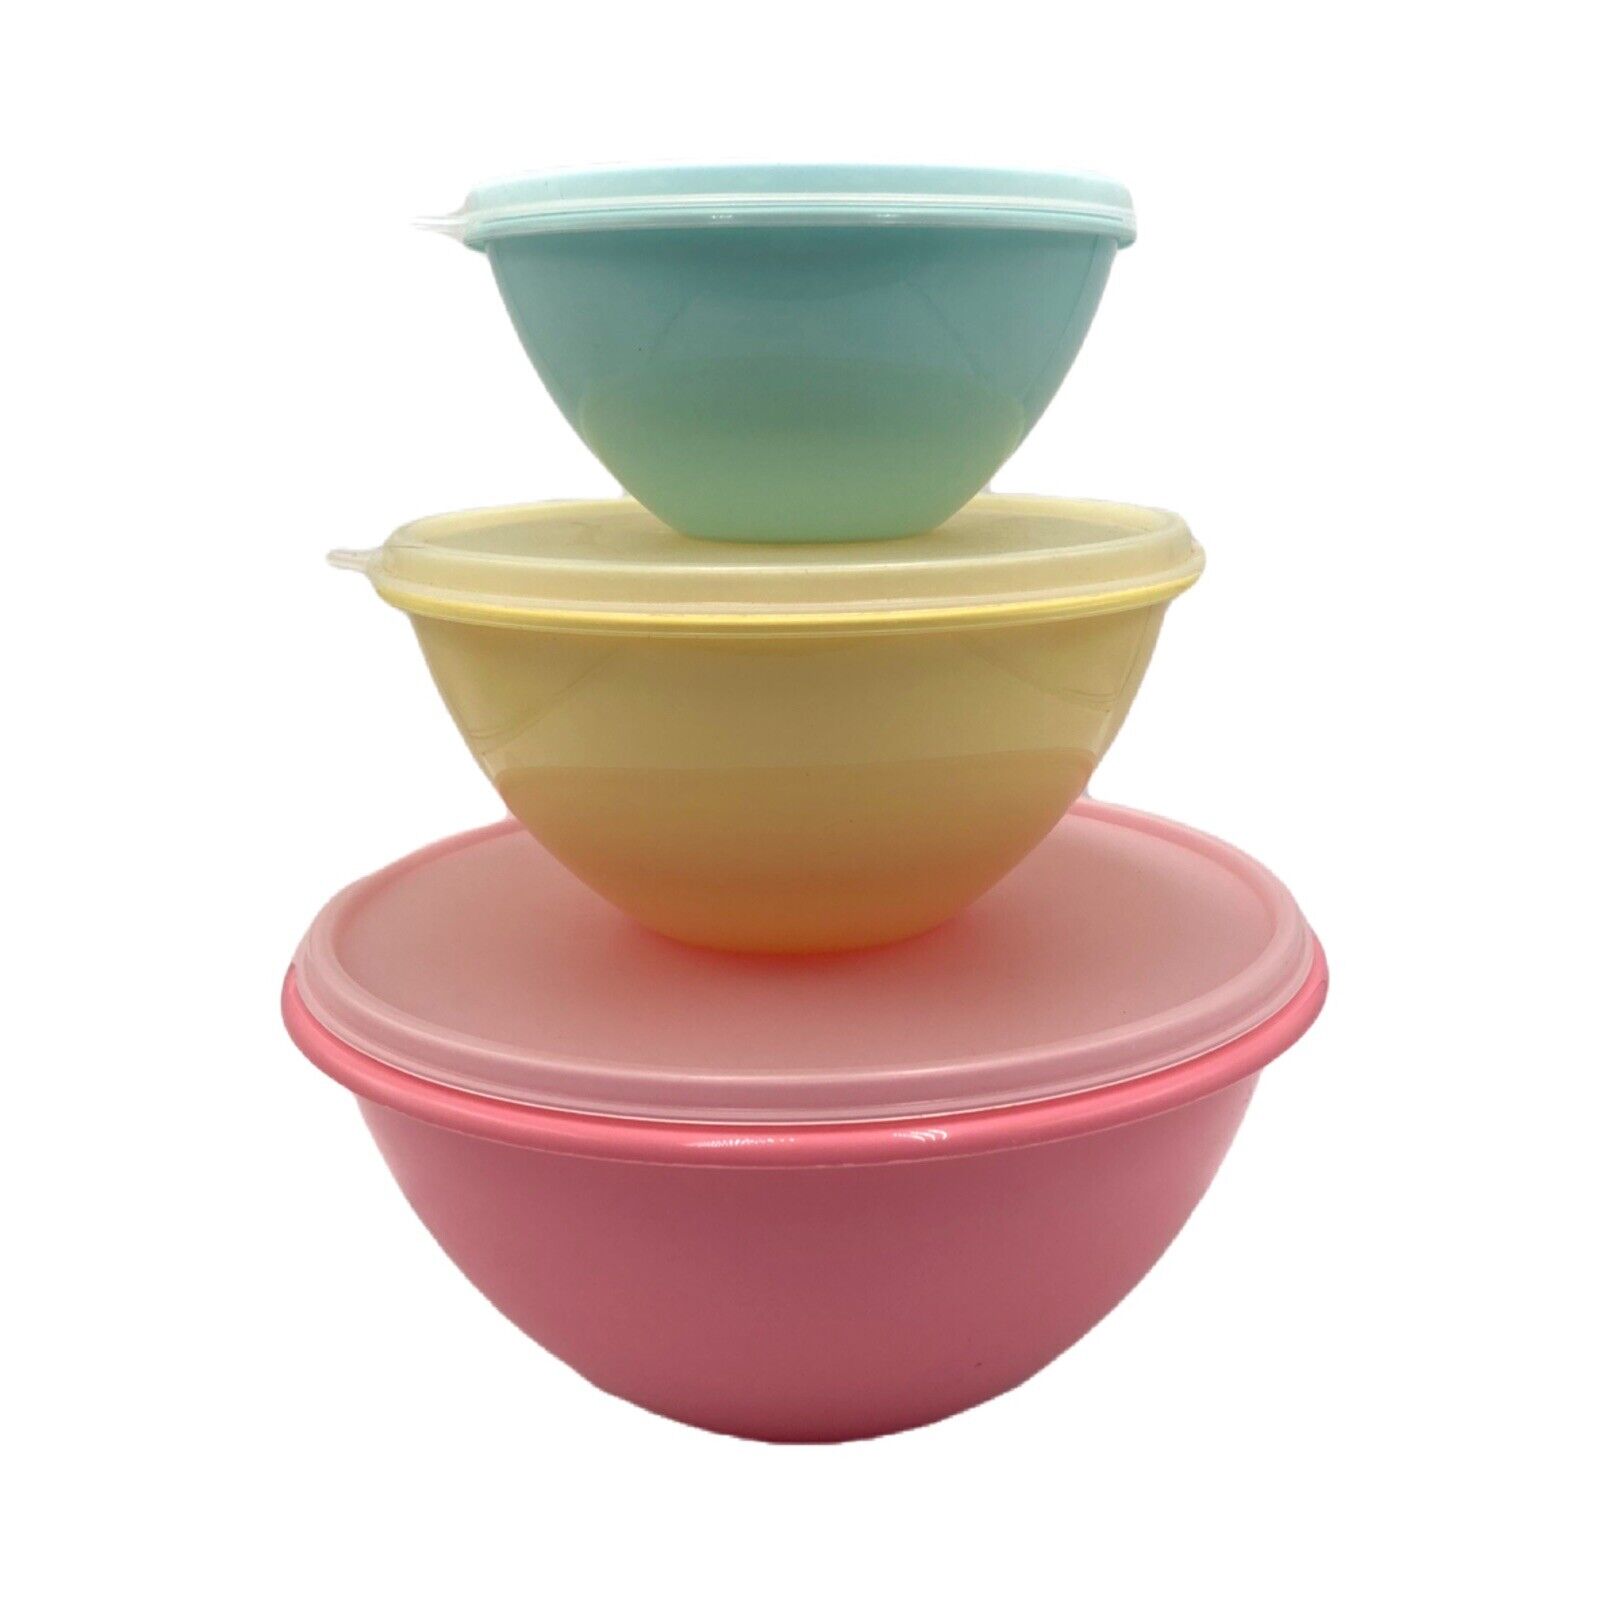 Tupperware Wonderlier Bowls 10.5 cup, 4.5 cup, 2 cup Set of 3 Pastel Colors